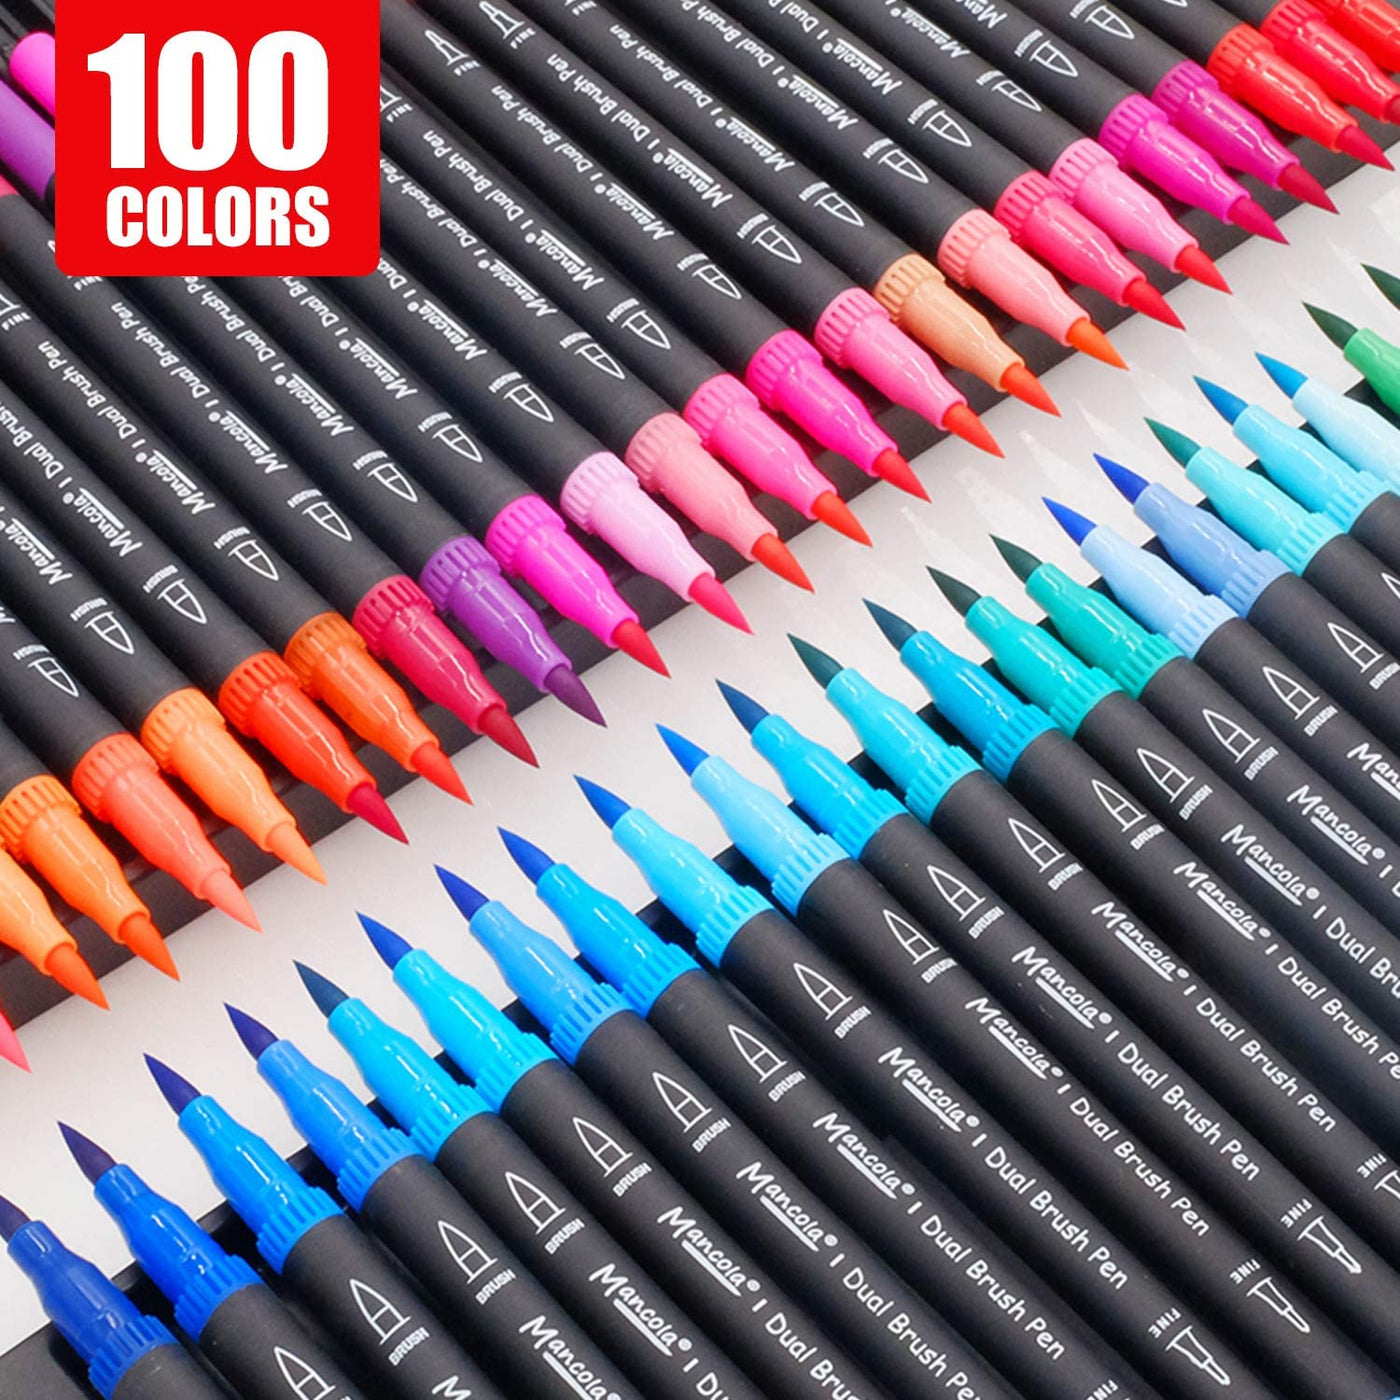 hhhouu 36 Colors Dual Brush Pen Set, Felt Tip Art Pens Brush Tip Markers for Adult Coloring Drawing Bullet Journals Planners Hand Lettering